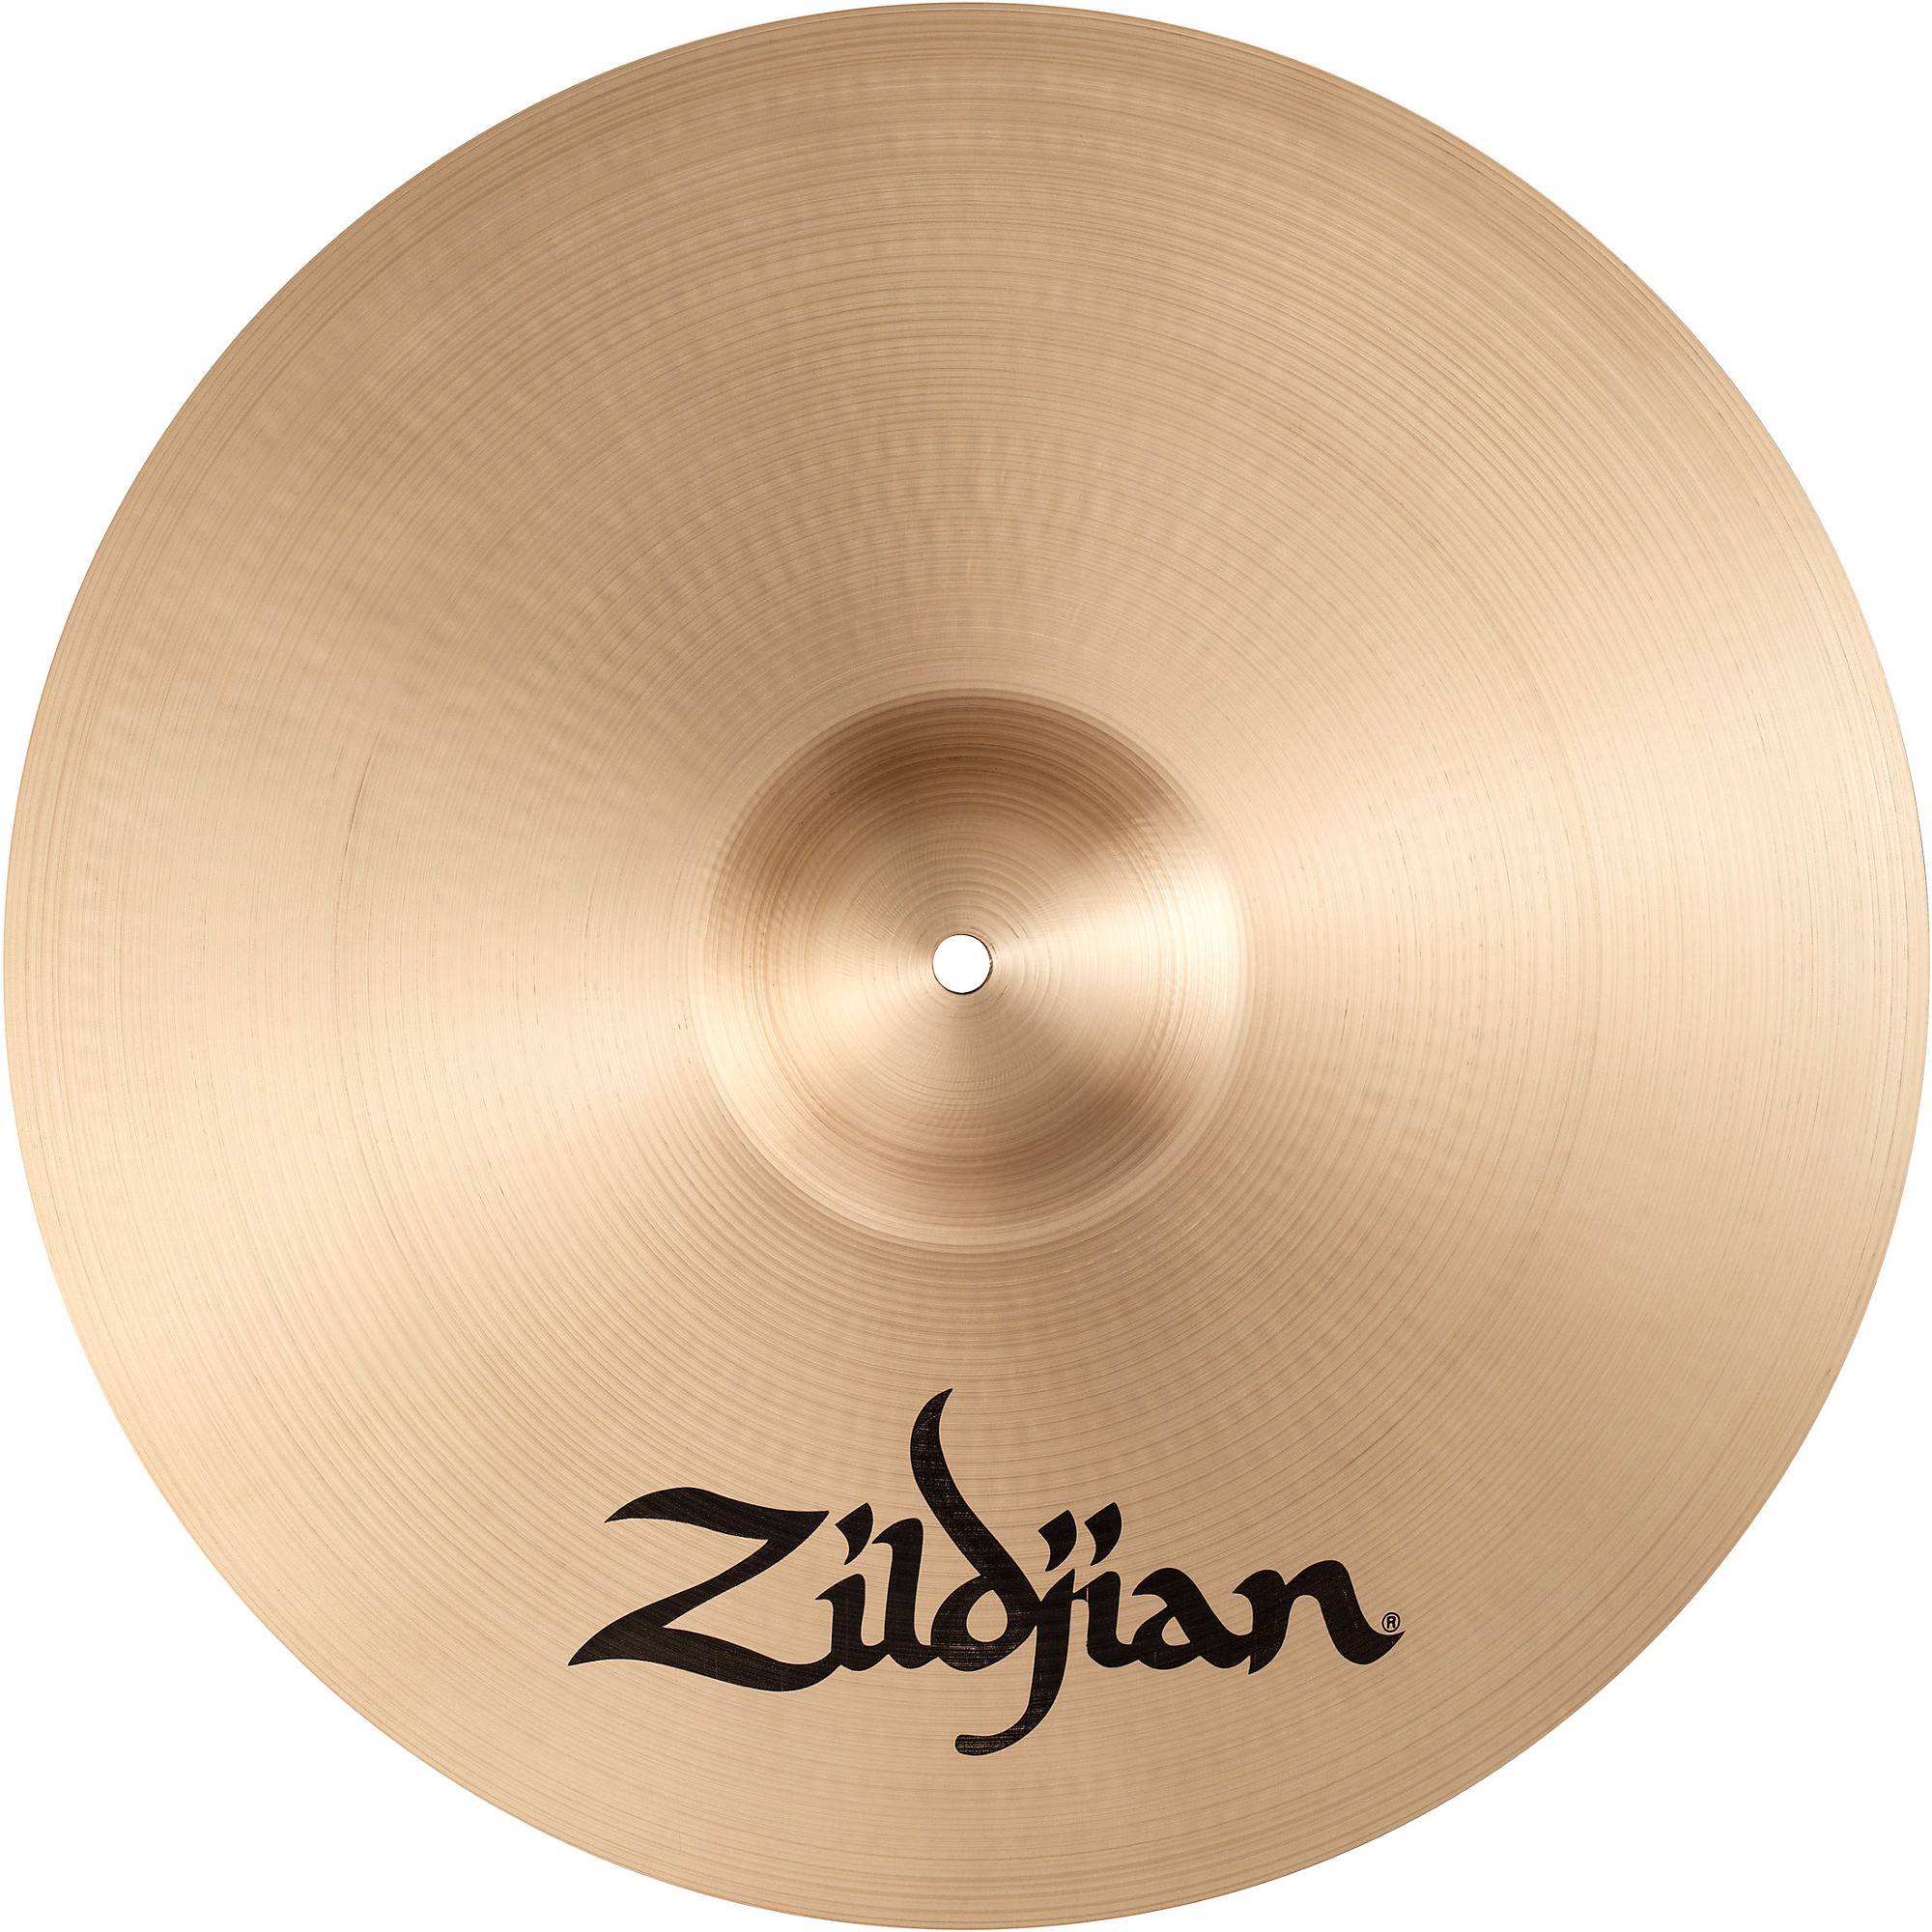 Zildjian A Series Medium-Thin Crash Cymbal 17 in. | Guitar Center